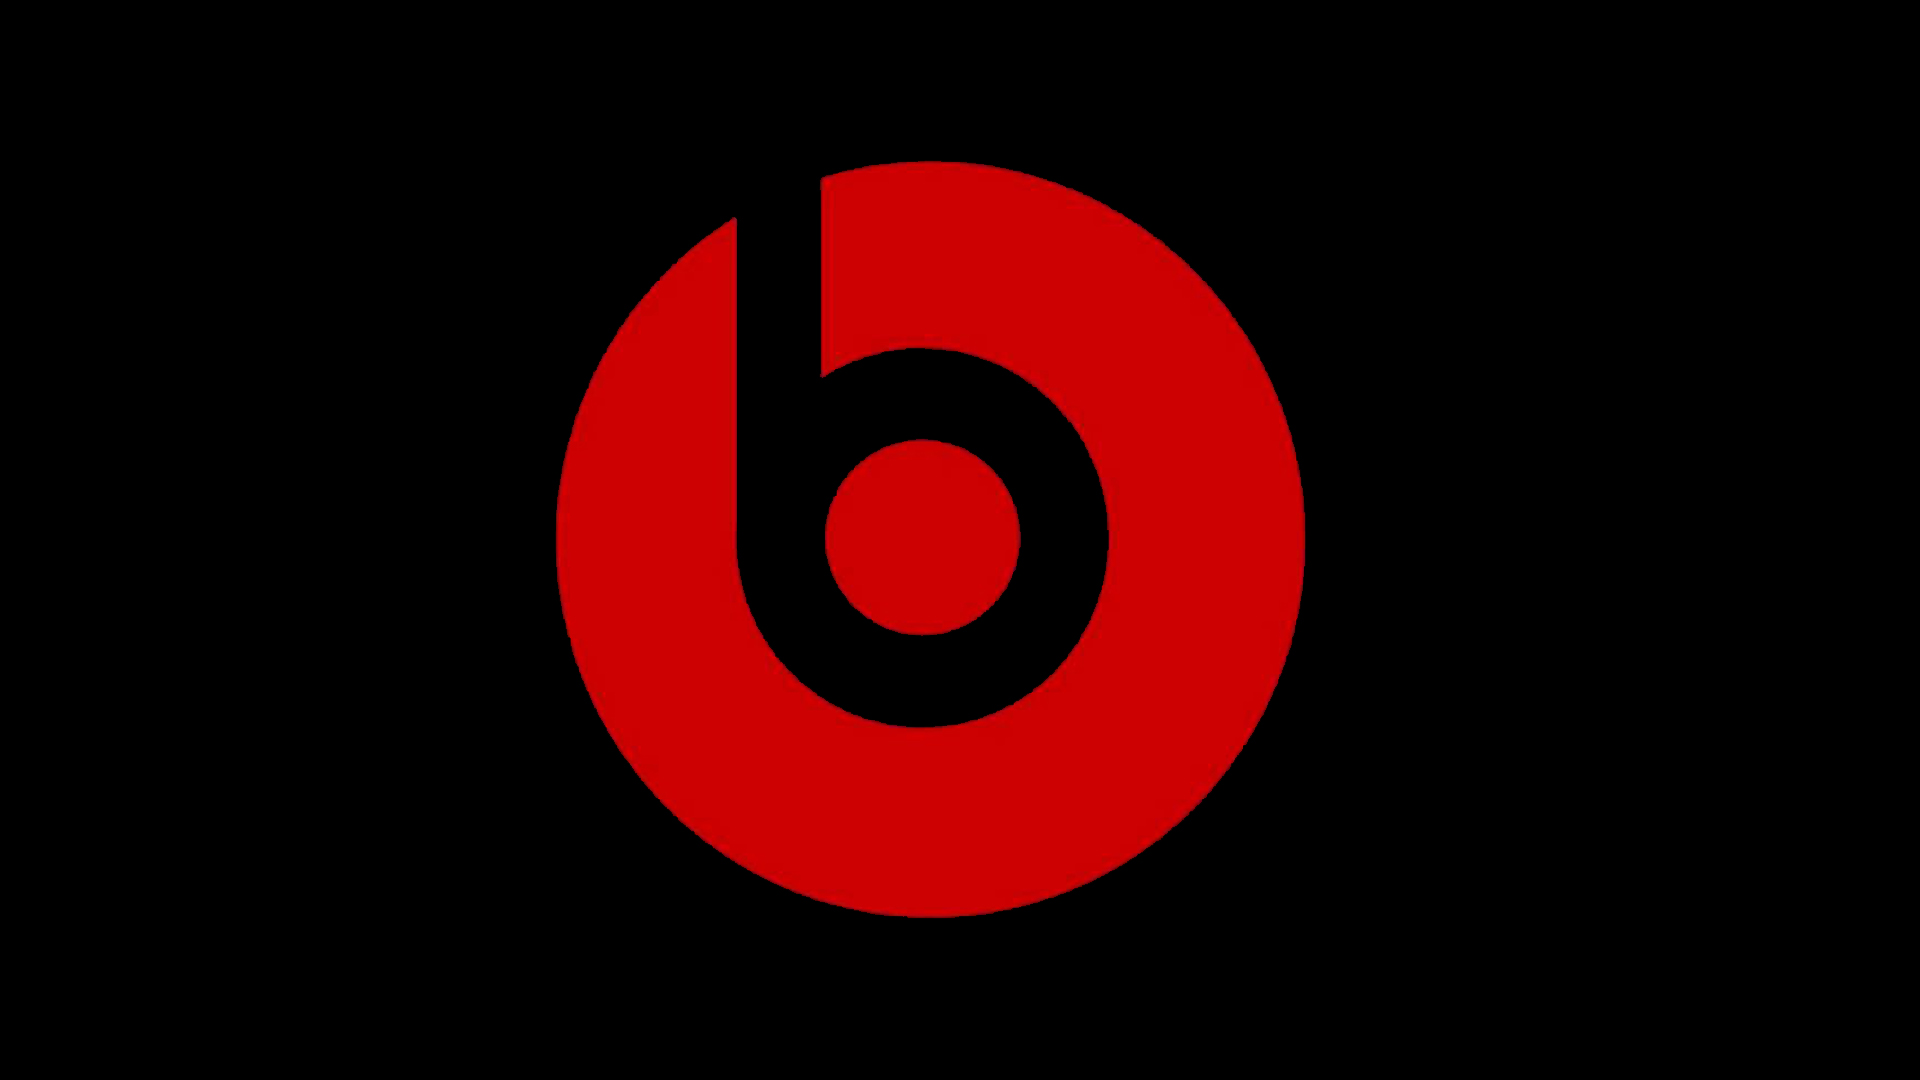 Apple ha retirado tres pares de auriculares Beats by Dr. Dre a la vez